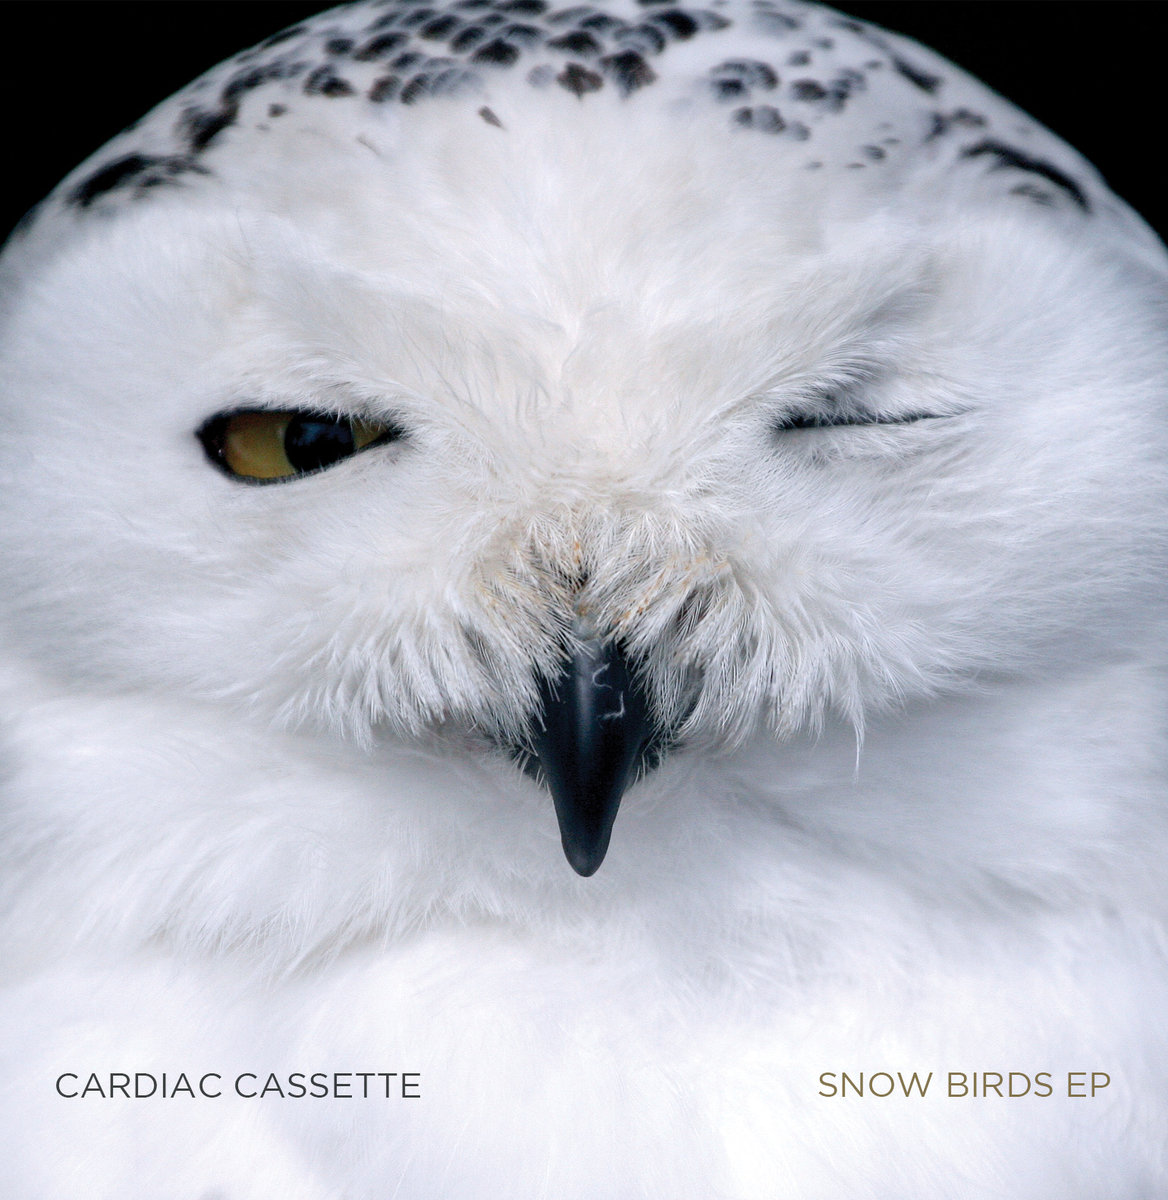 Cardiac Cassette Releases Three Song EPSnow Birds